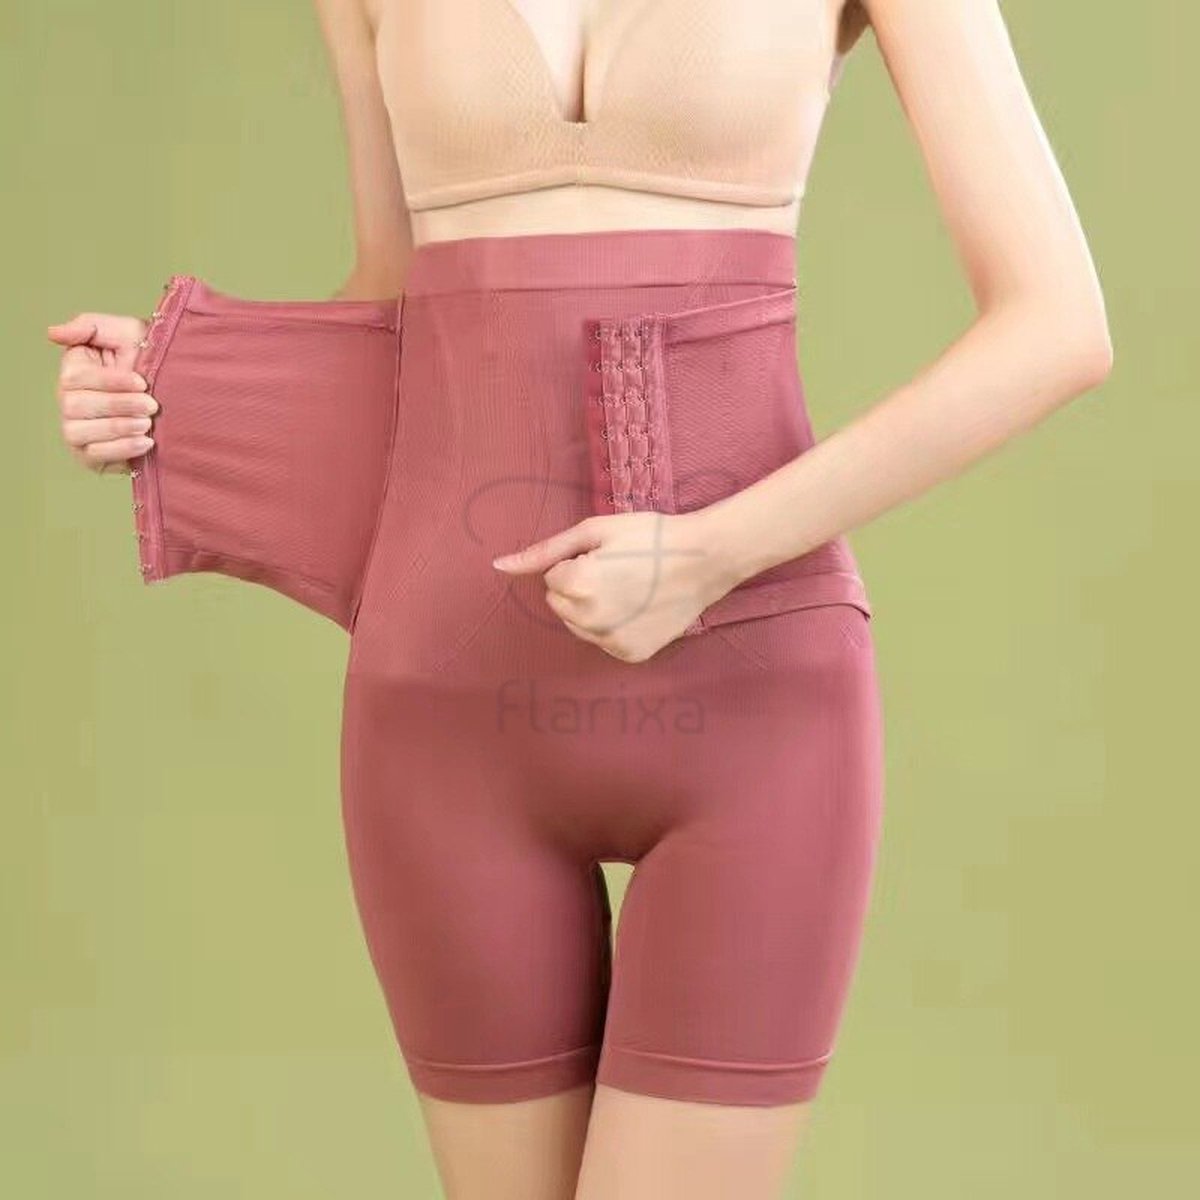 Sara Shop - Shapewear Dames - Butt lifter - Slipje met vulling - Tummy control - Corrigerend Ondergoed Dames Buttlifter - Volle billen -Roos - Maat XL - Topkwaliteit